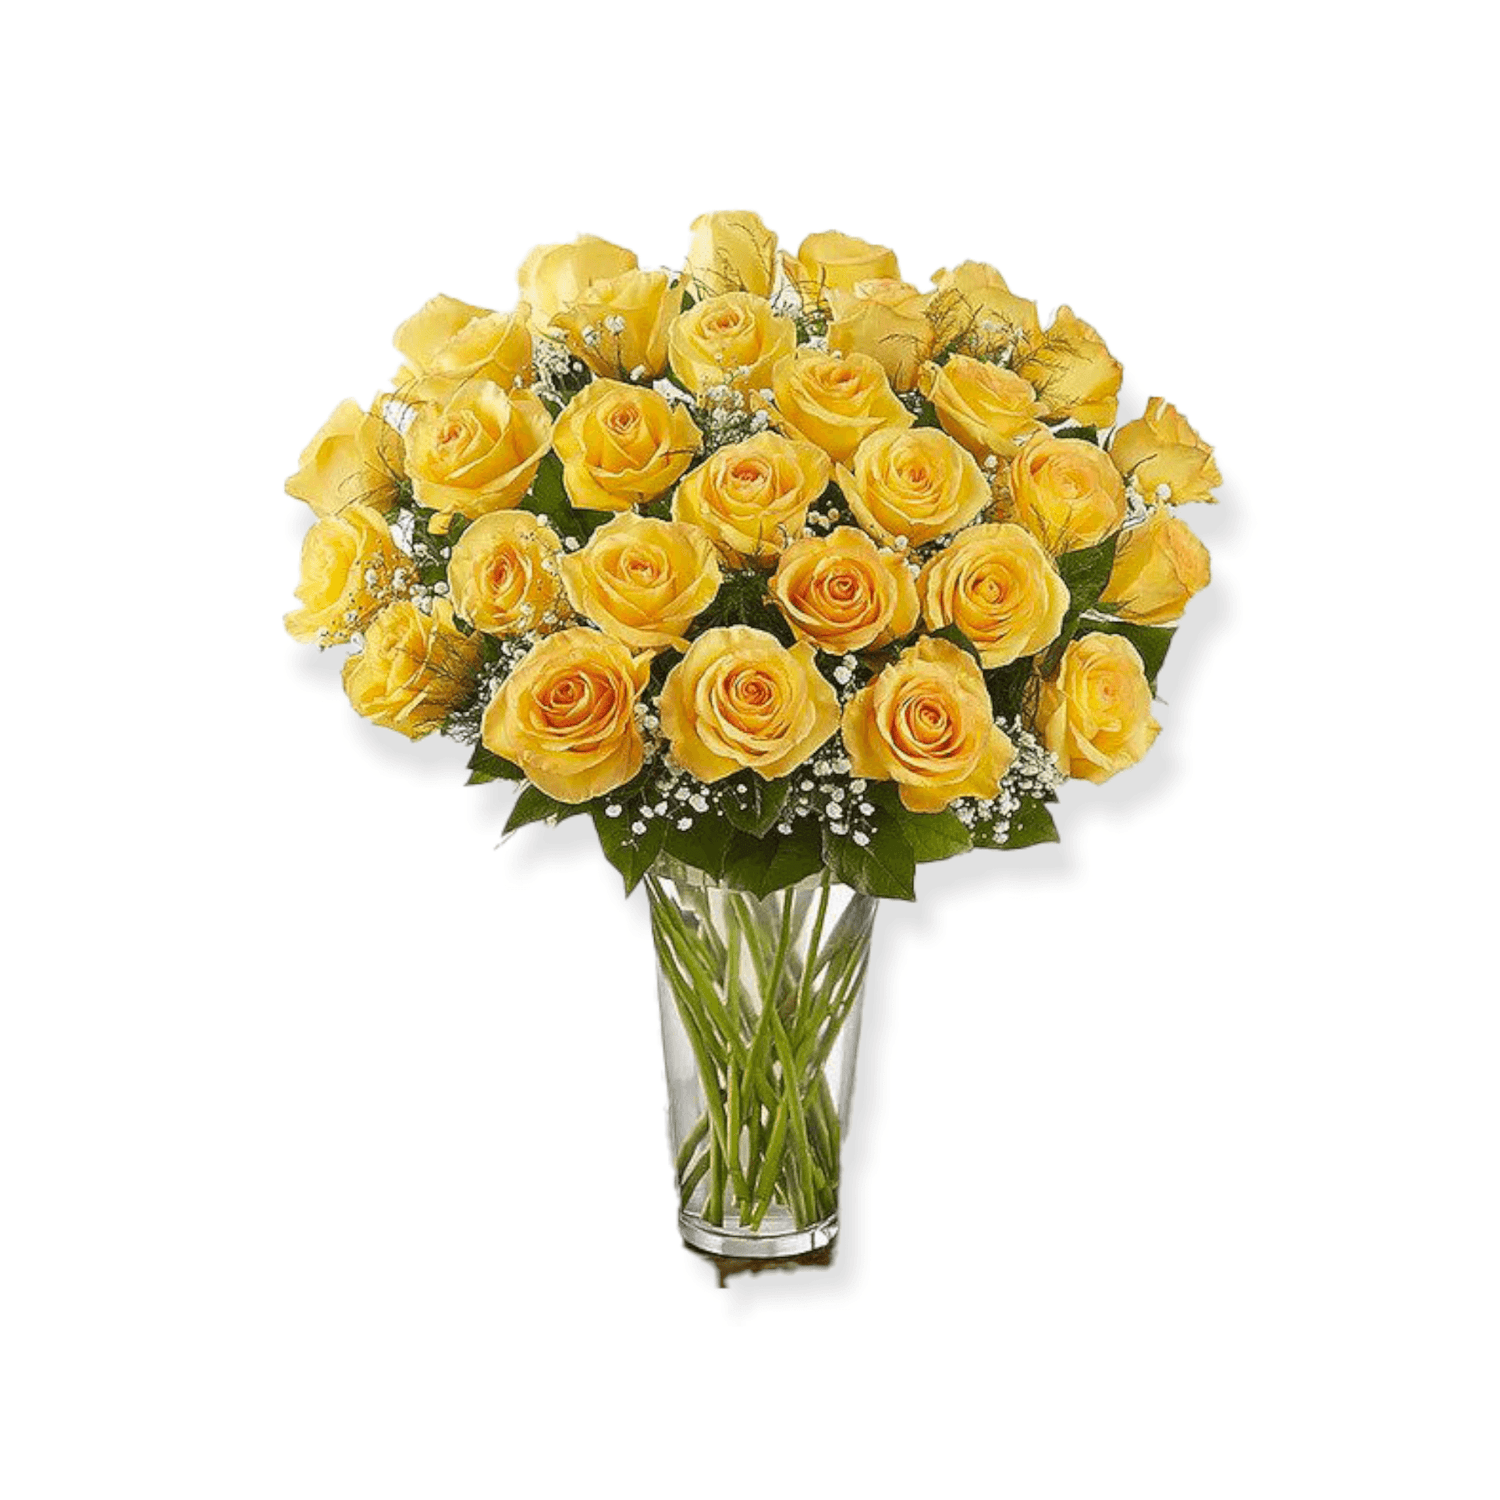 Yellow Roses - The Flower Shop Atlanta